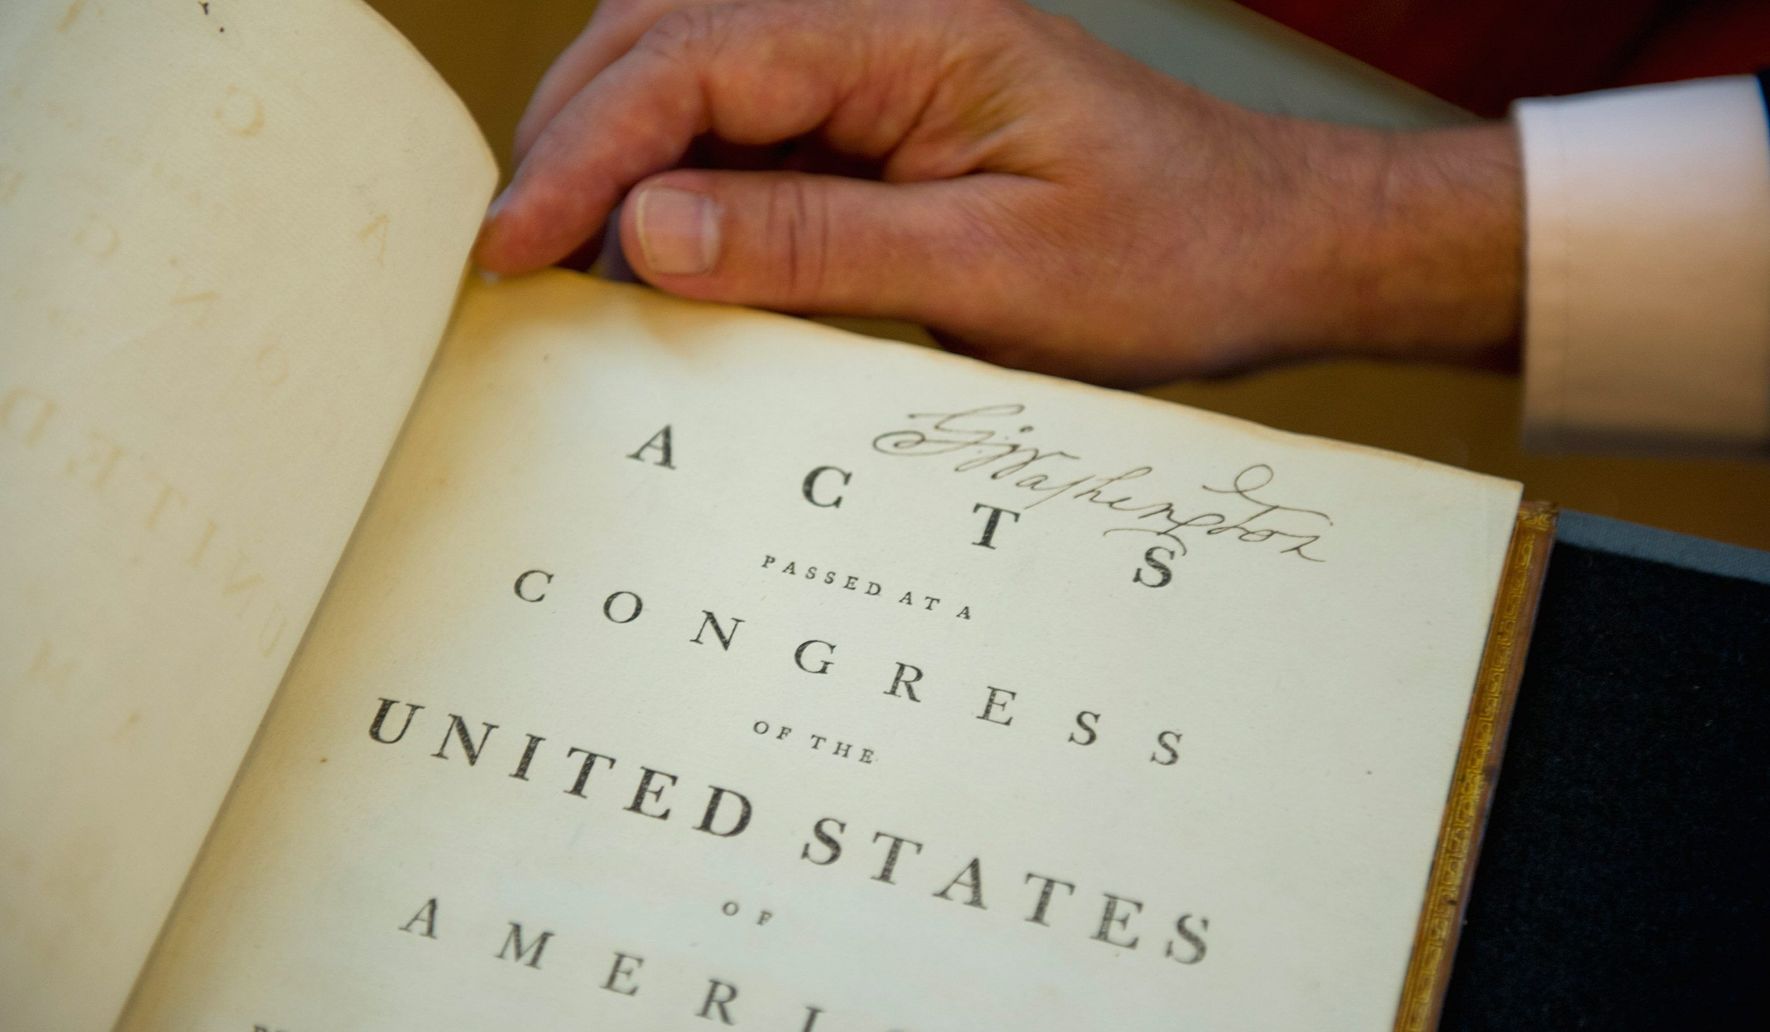 George Washington signed Acts of Congress